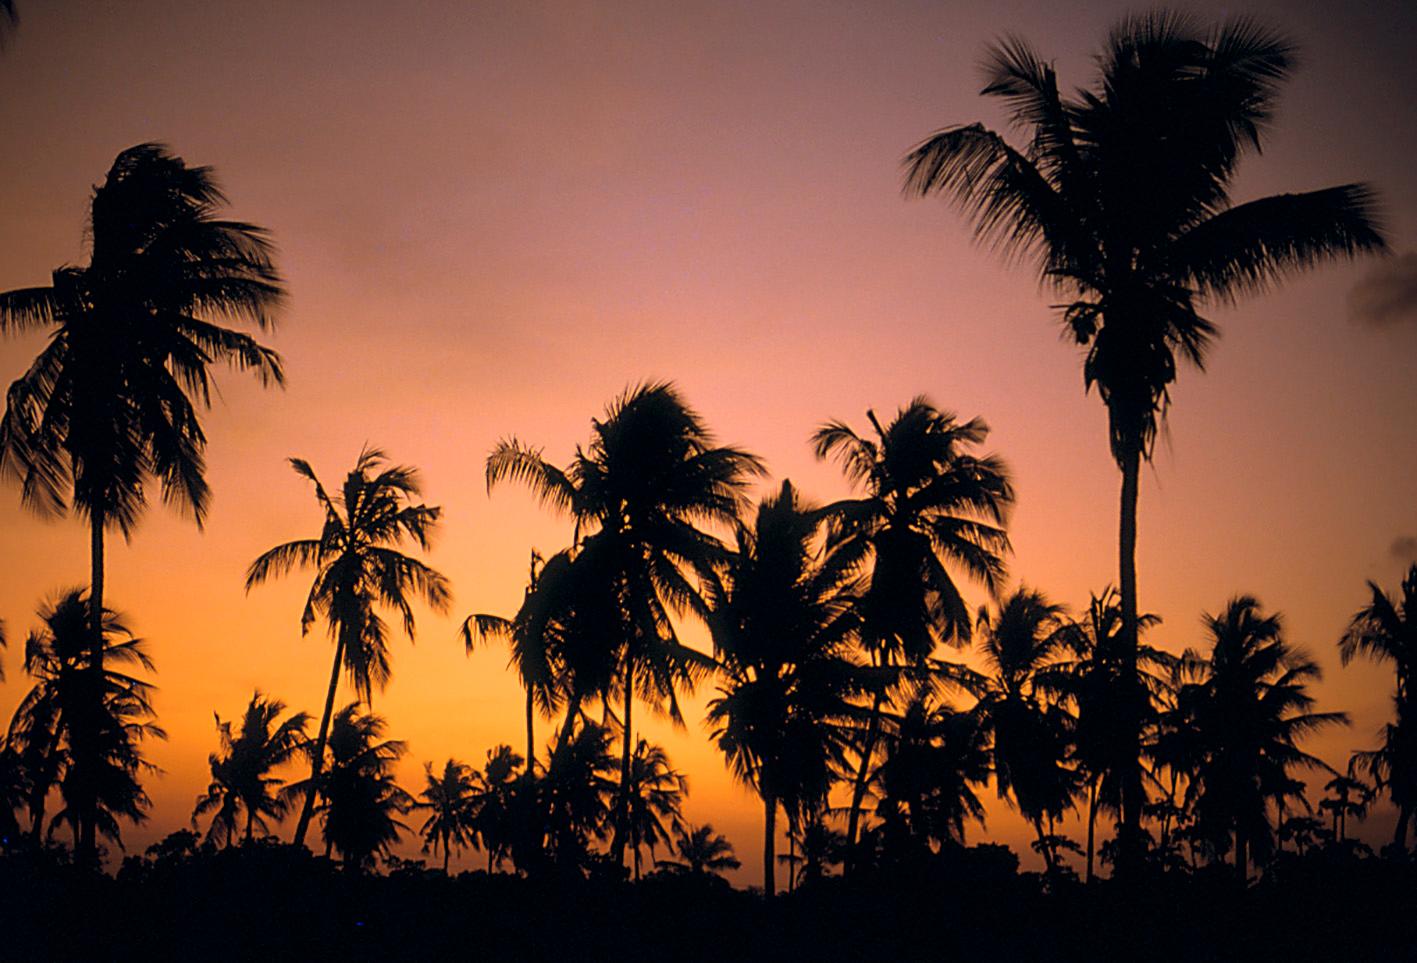 Bellec Color Photograph - Sunset in Sri Lanka